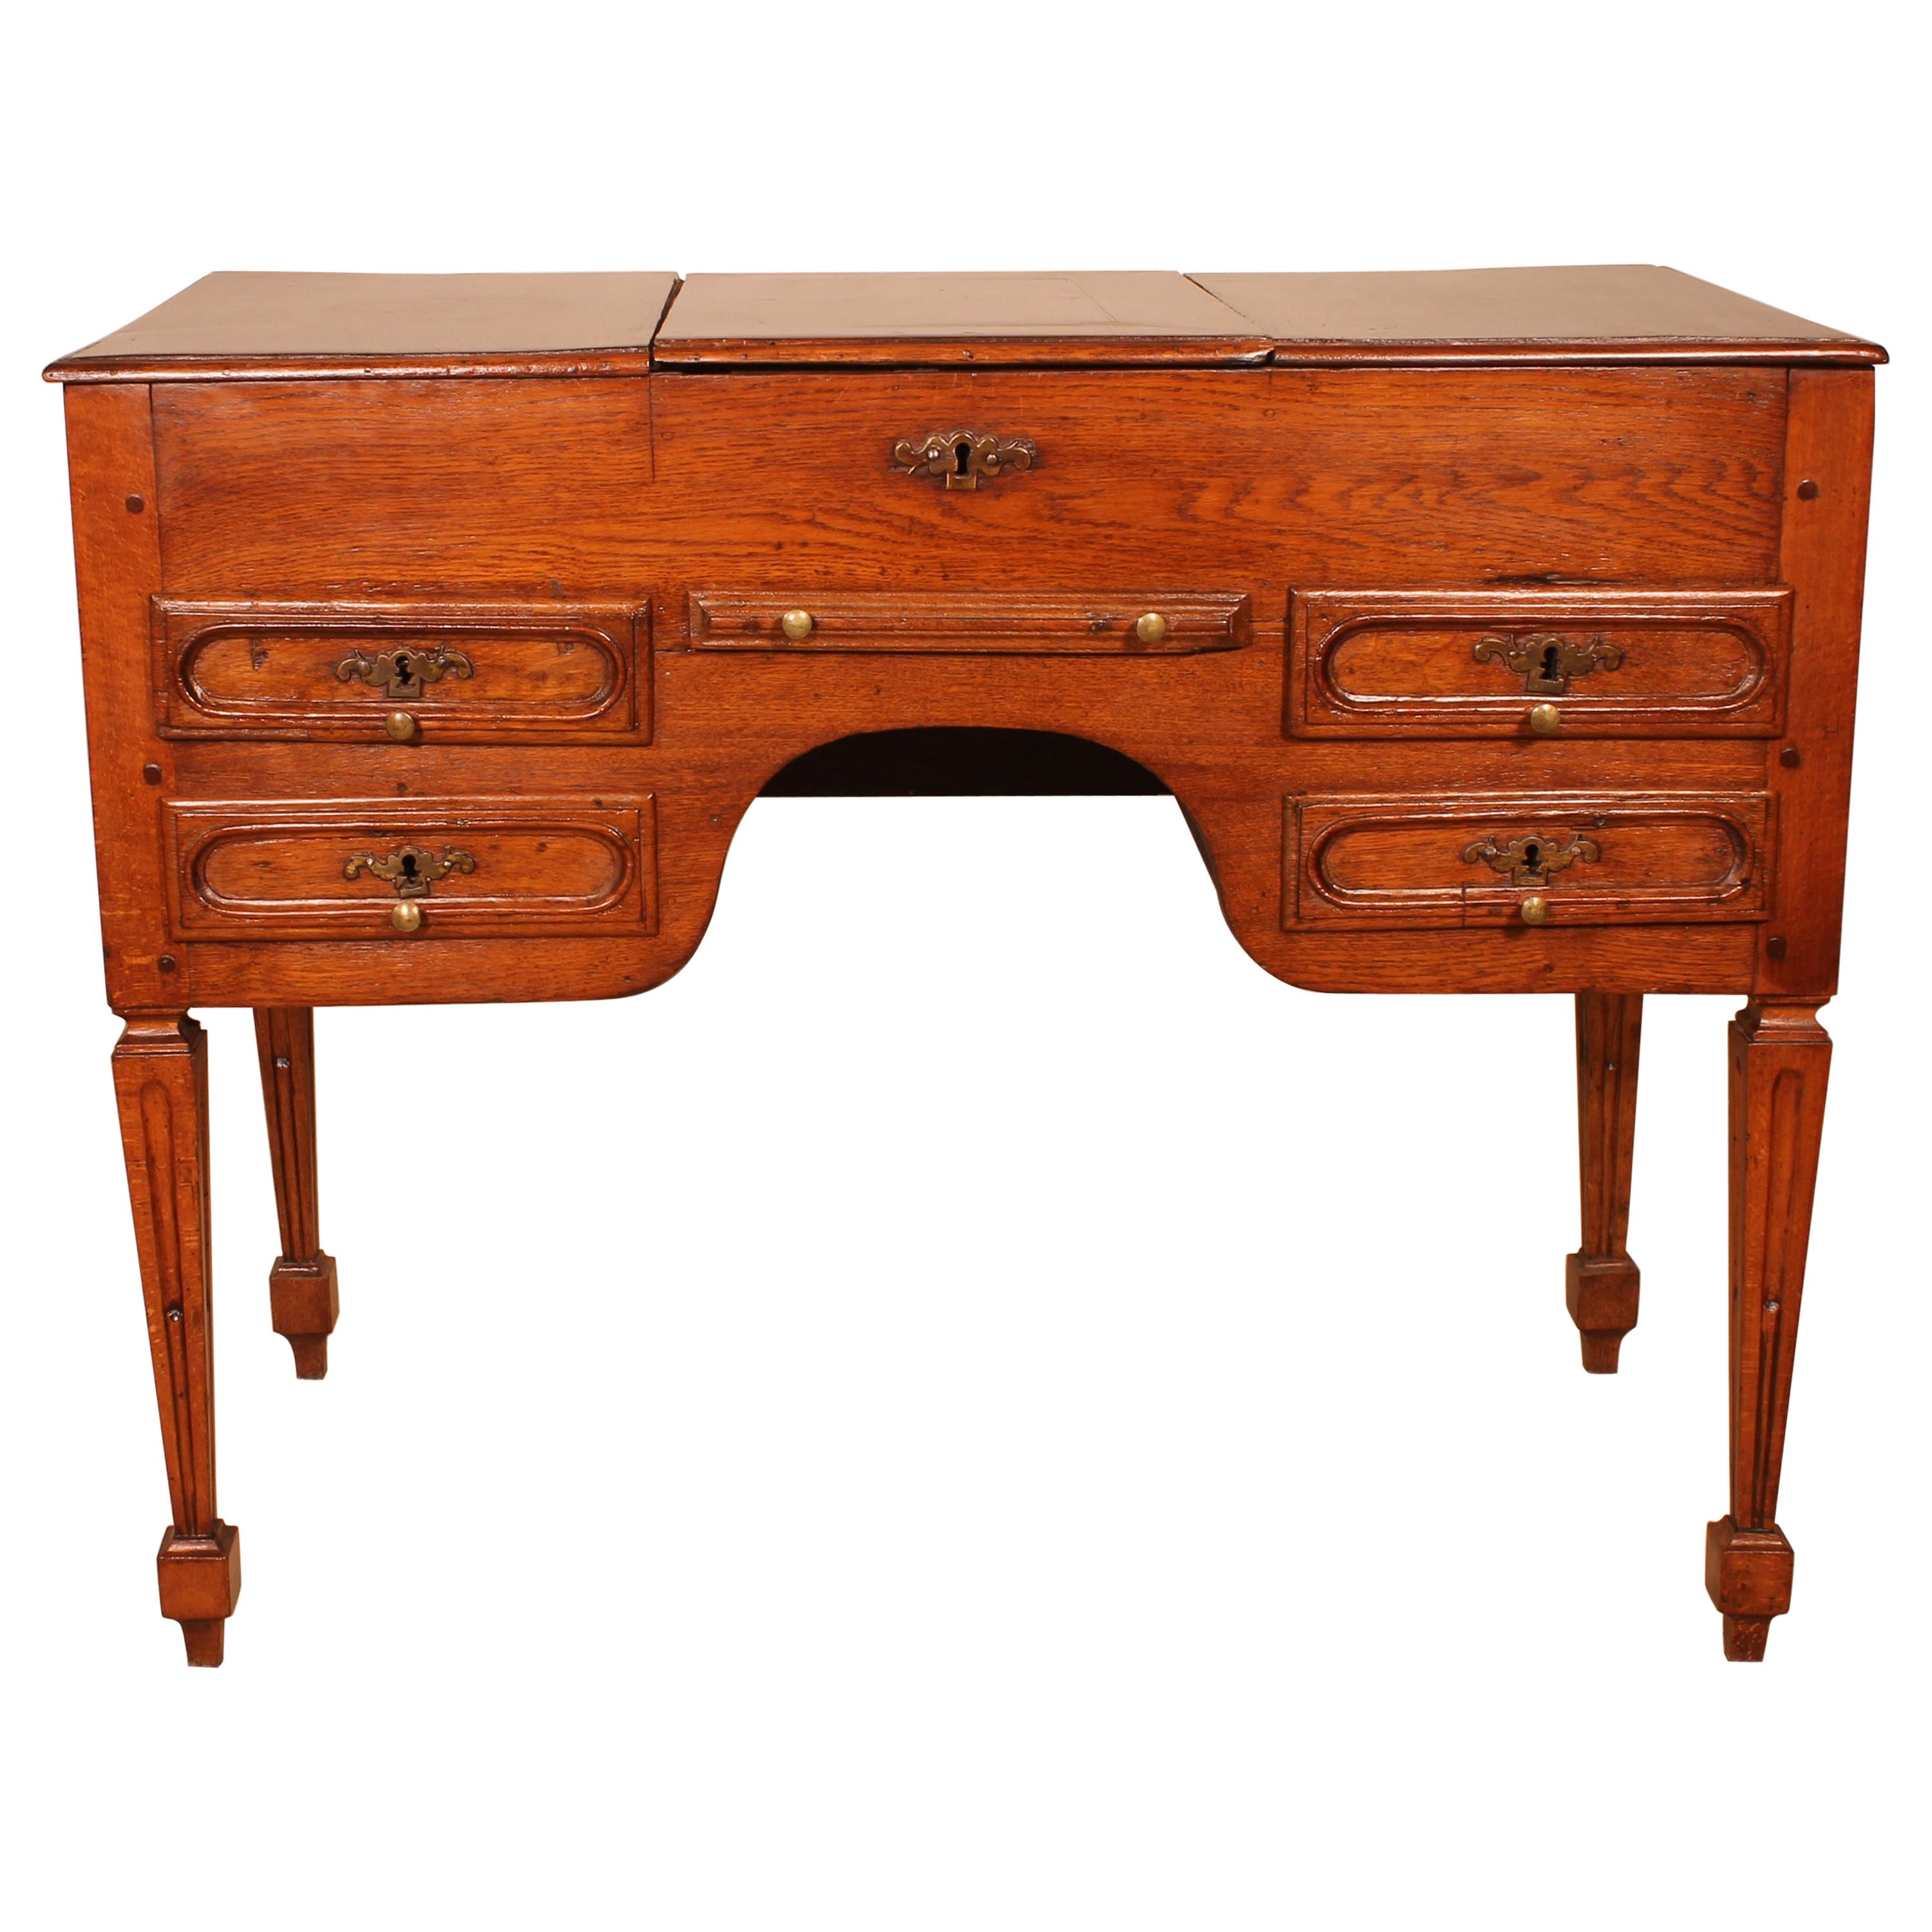 Rare Louis XVI Oak Dressing Table or Sofa Table, End of 18th Century